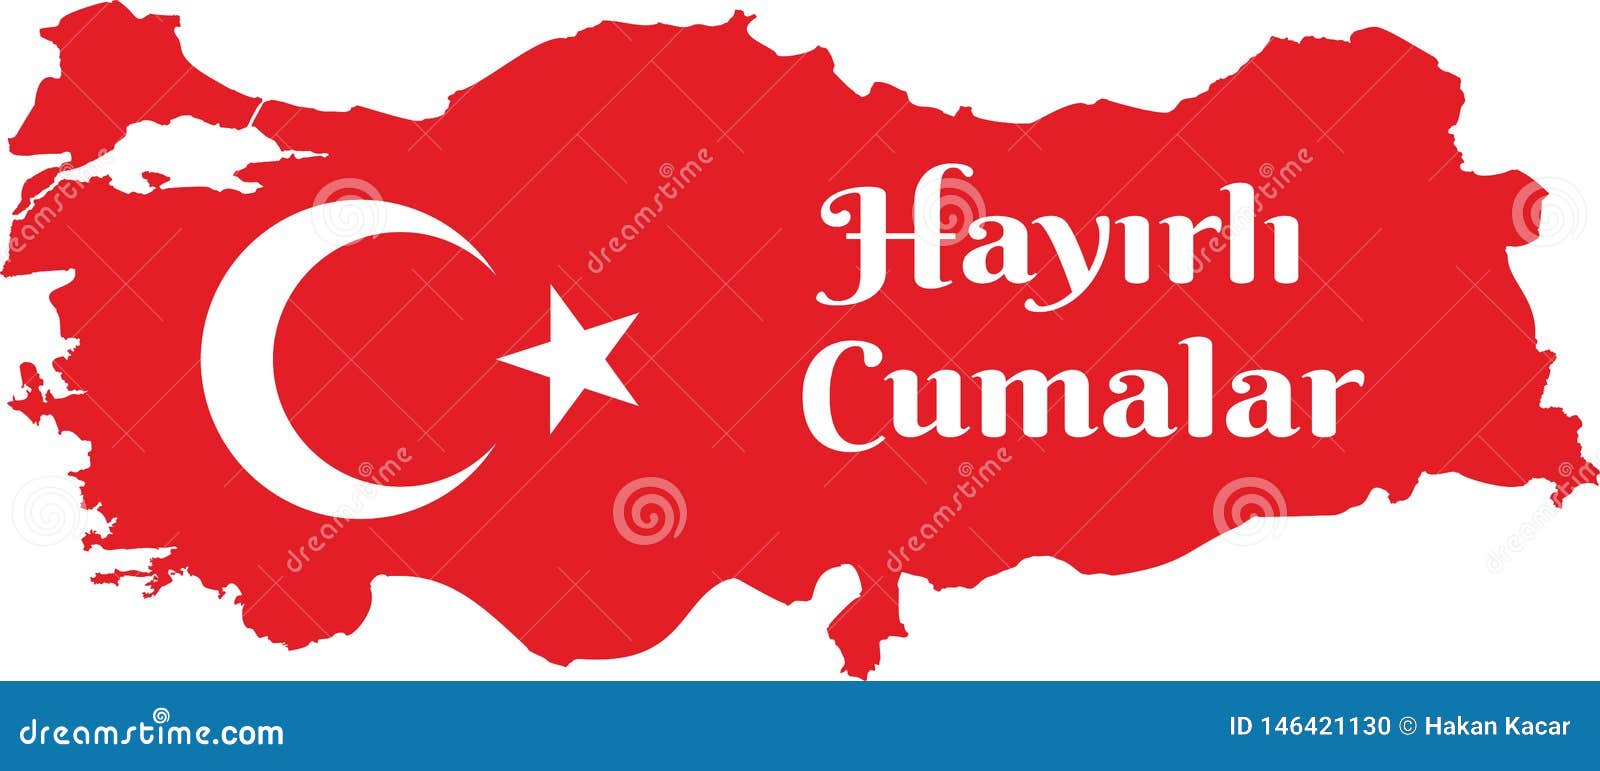 have a good friday turkish speak: hayirli cumalar. turkey map  .  of jumah mubarakah friday mubarak in tur